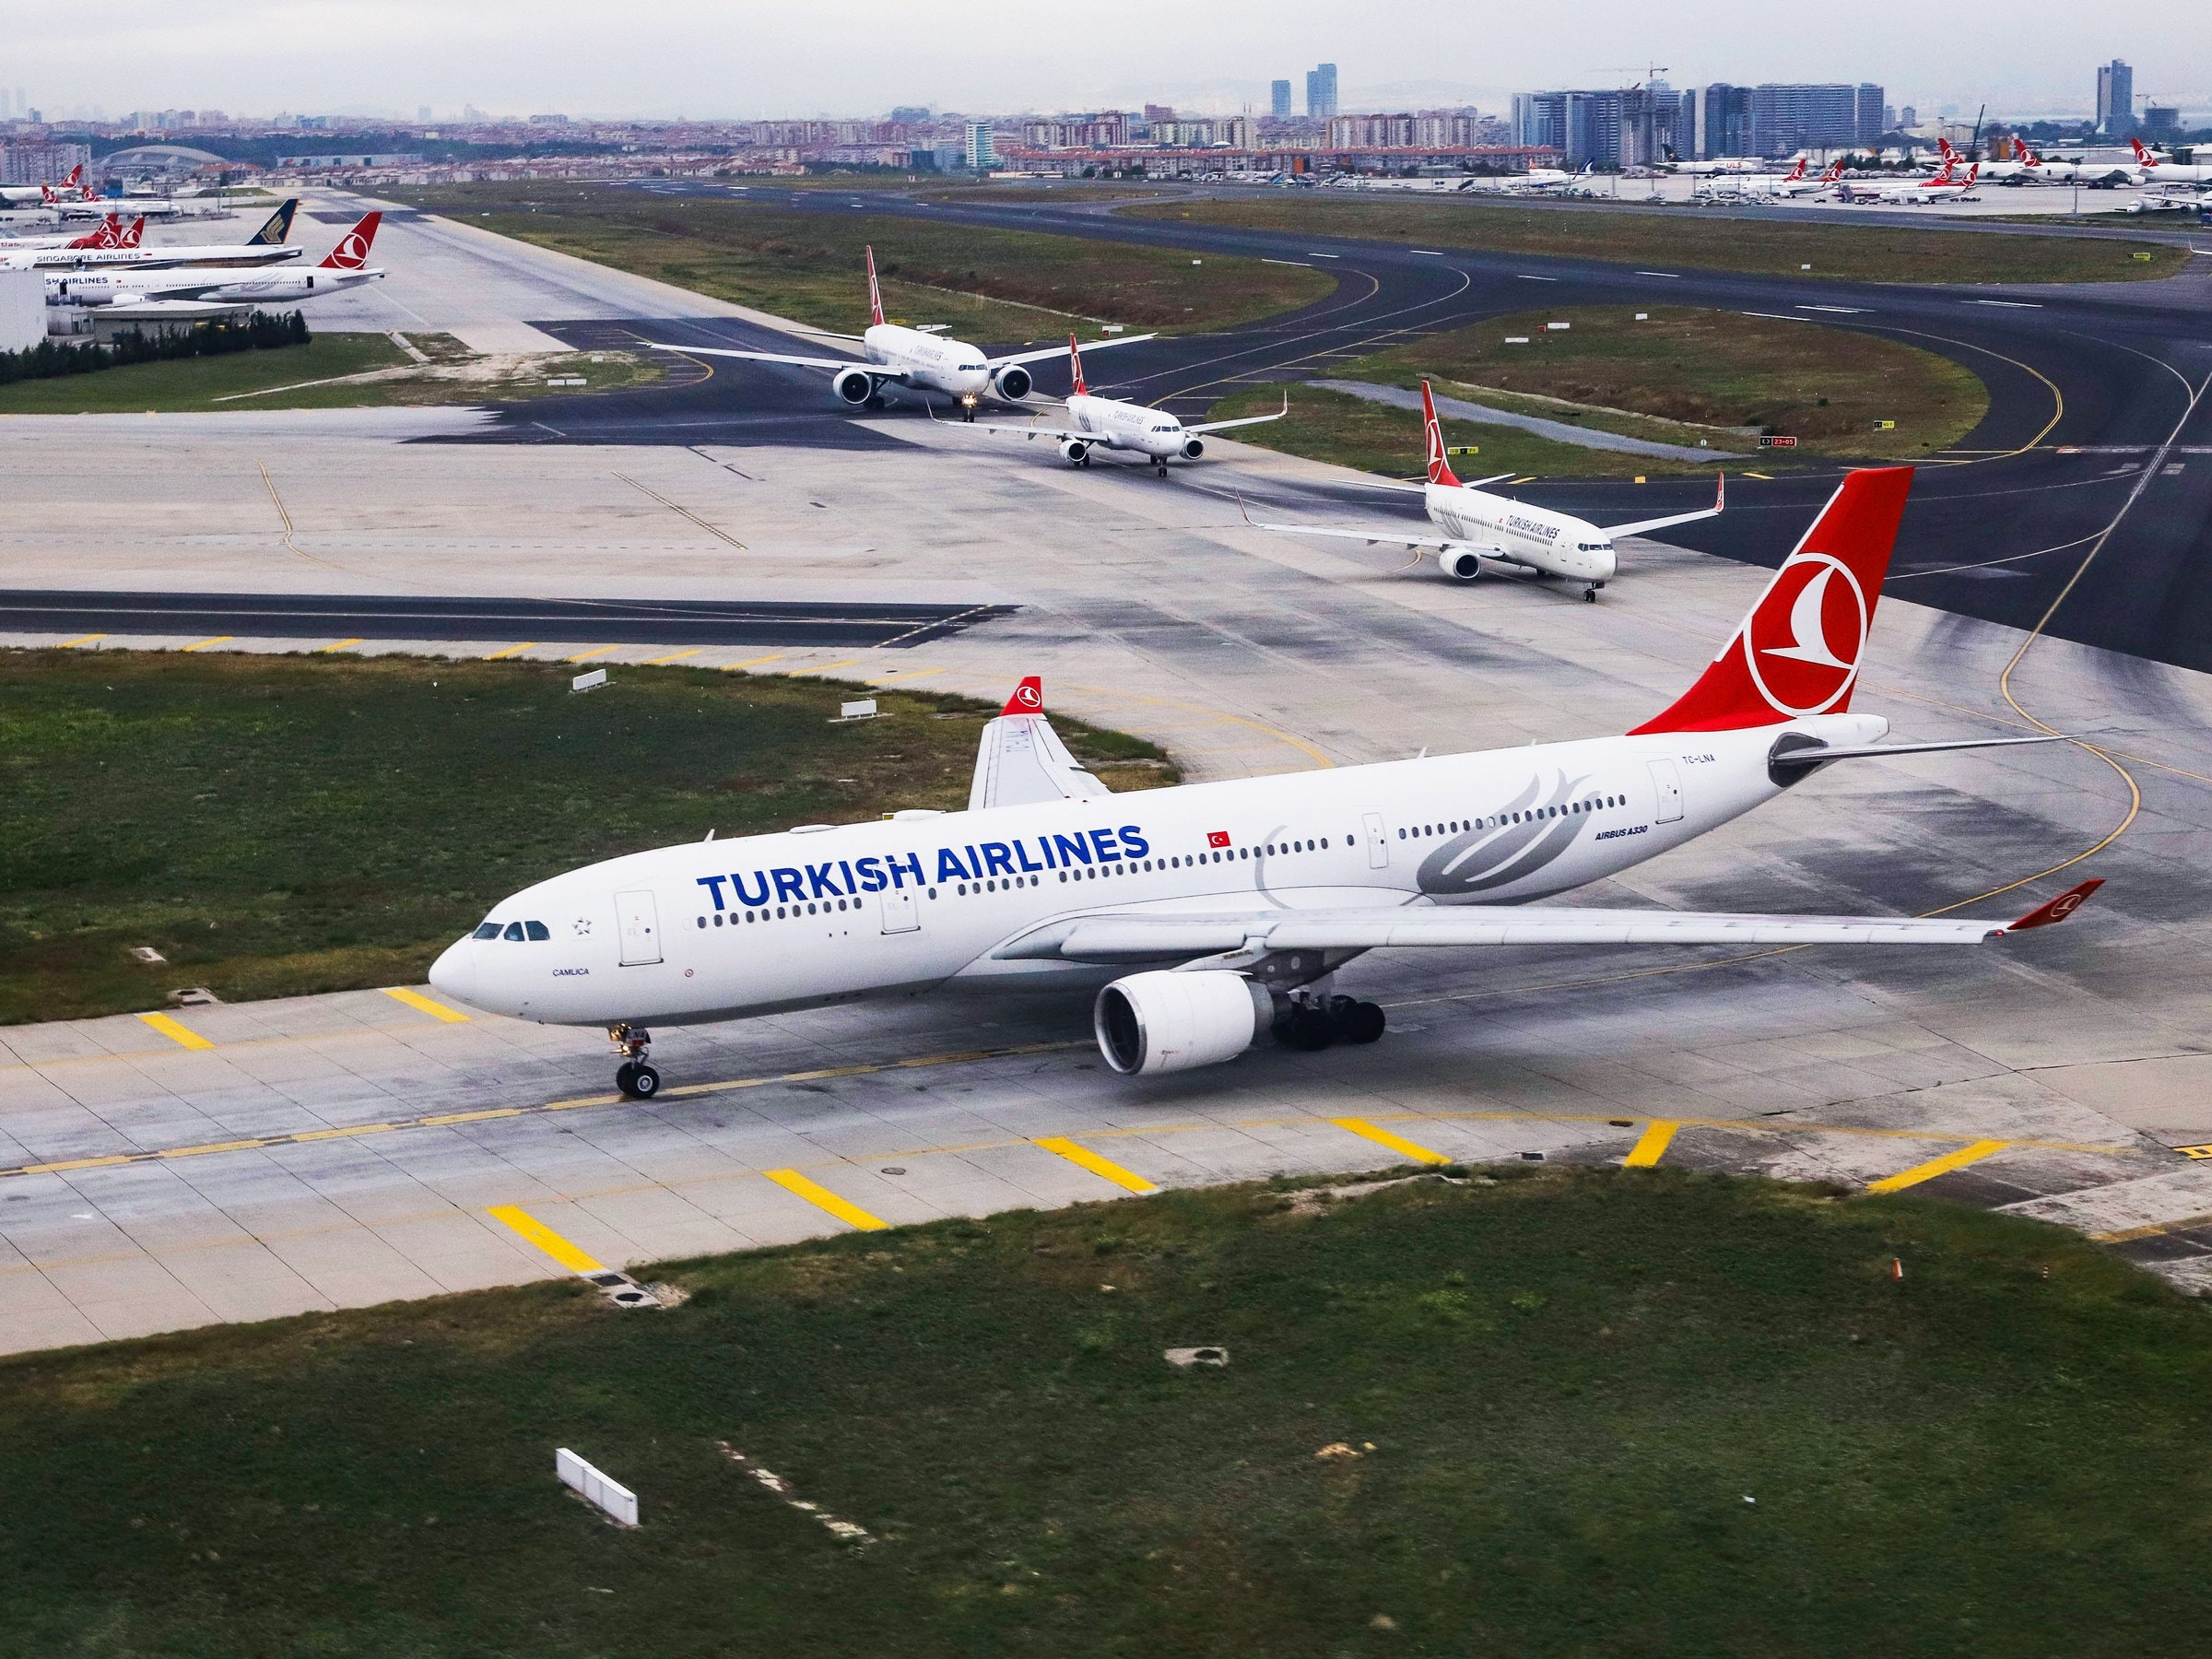 Lagos tracks 120 passengers on Turkish Airlines flight with Italian patient  